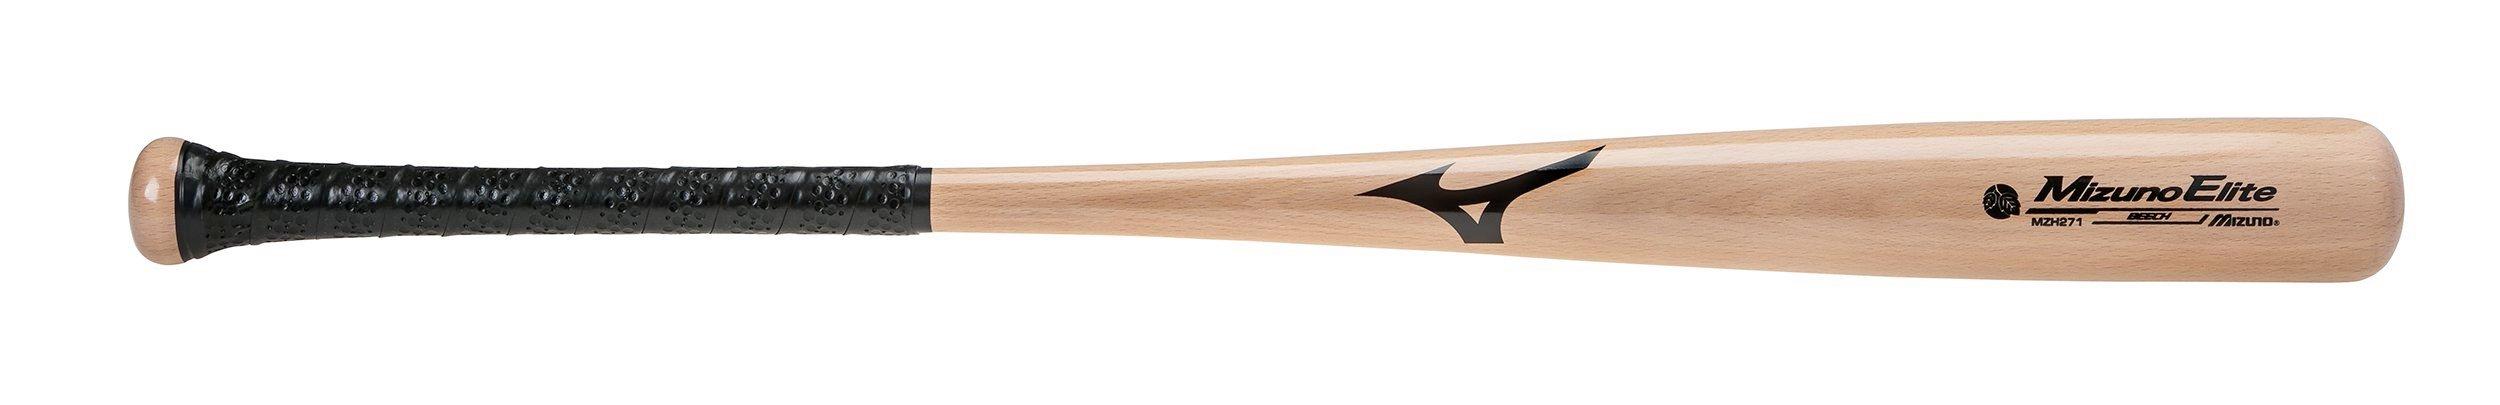 Mizuno MZH271 33 Inch Beech Elite Wood Baseball Bat